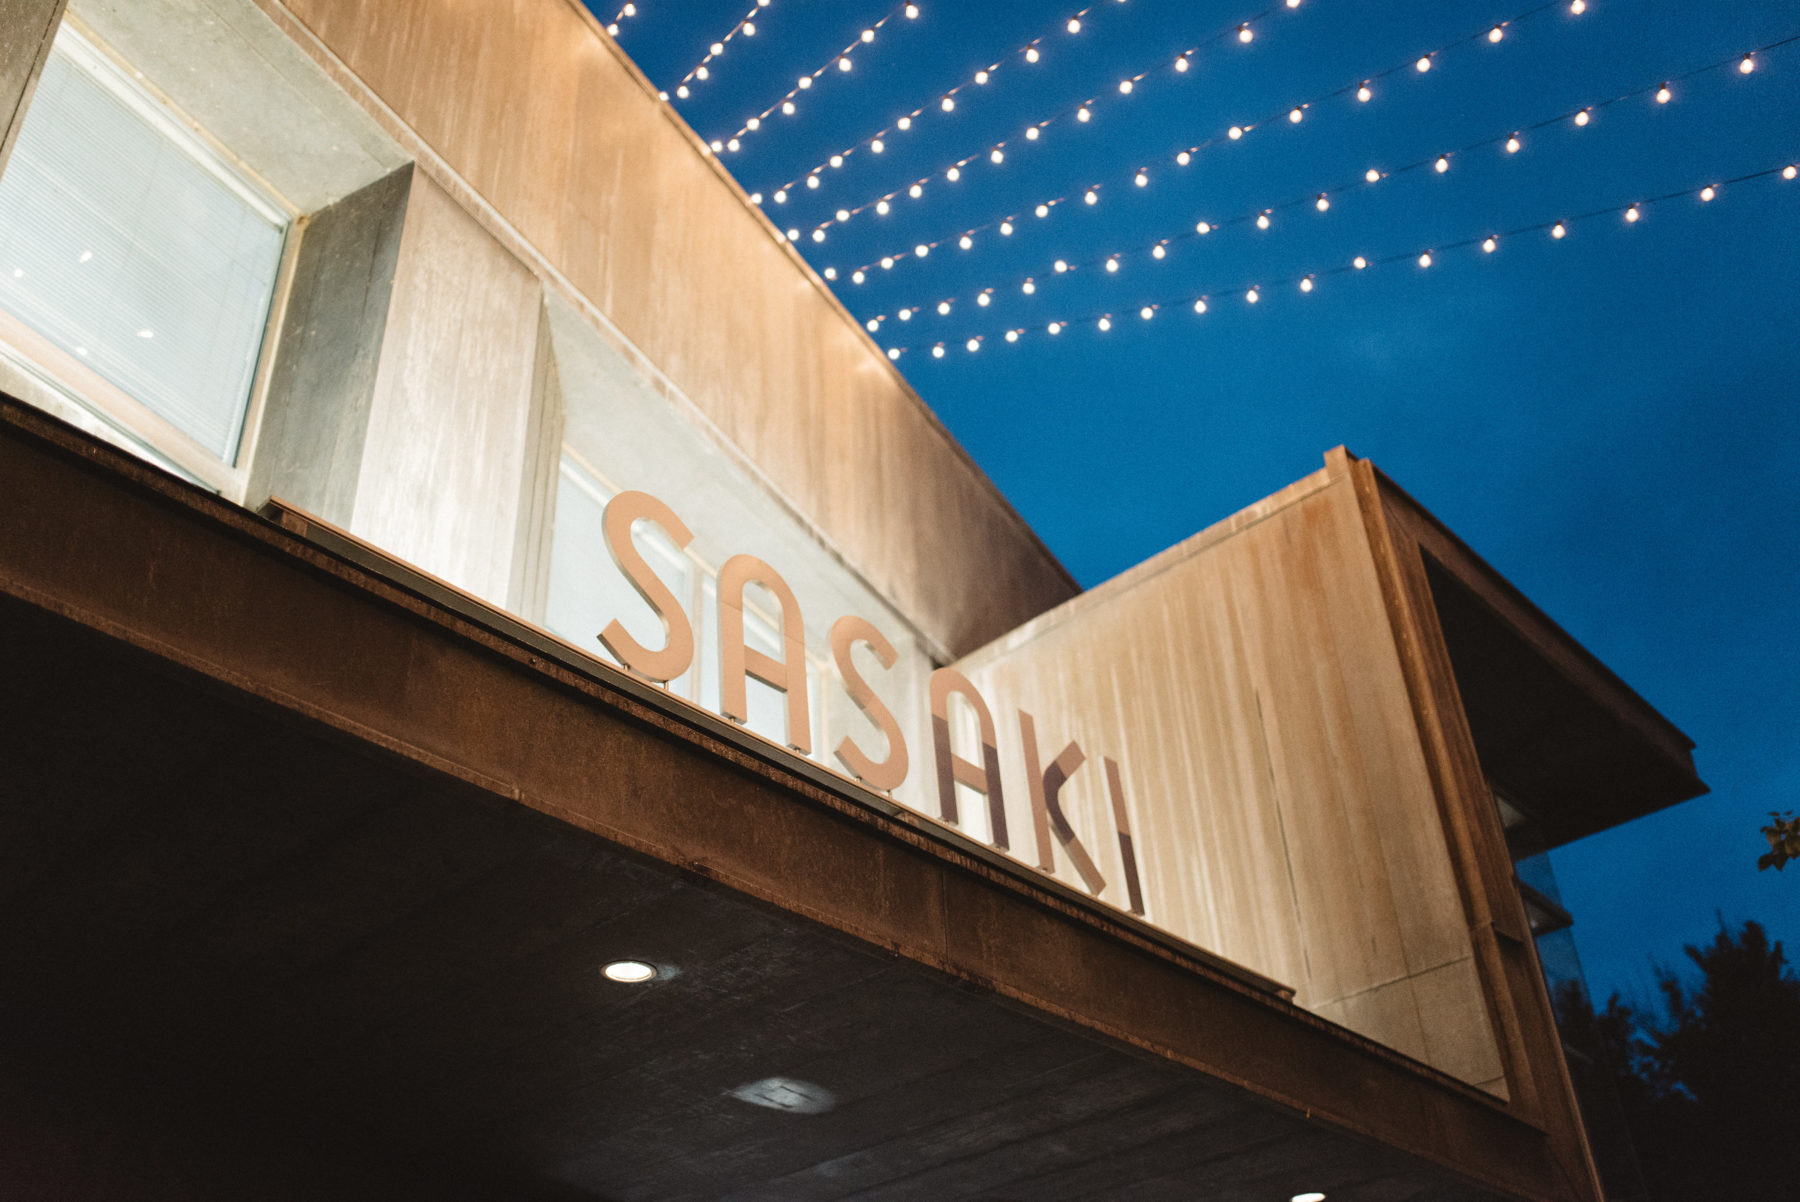 Sasaki logo in front of building illuminated